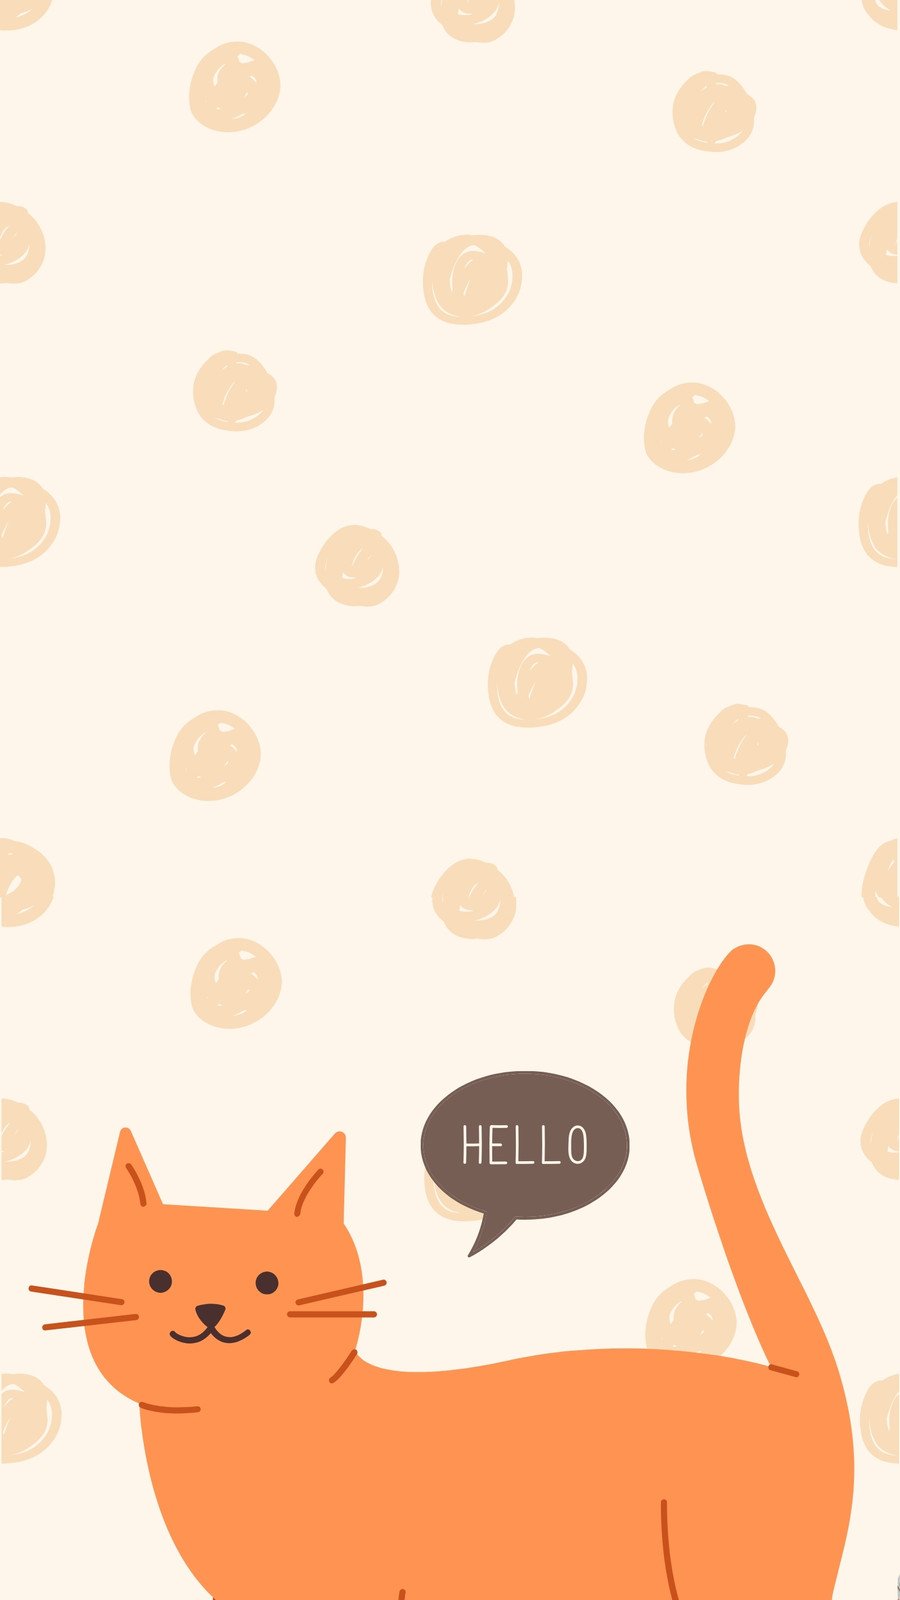 Cute Cat Kitten Animal iPhone Wallpapers Free Download